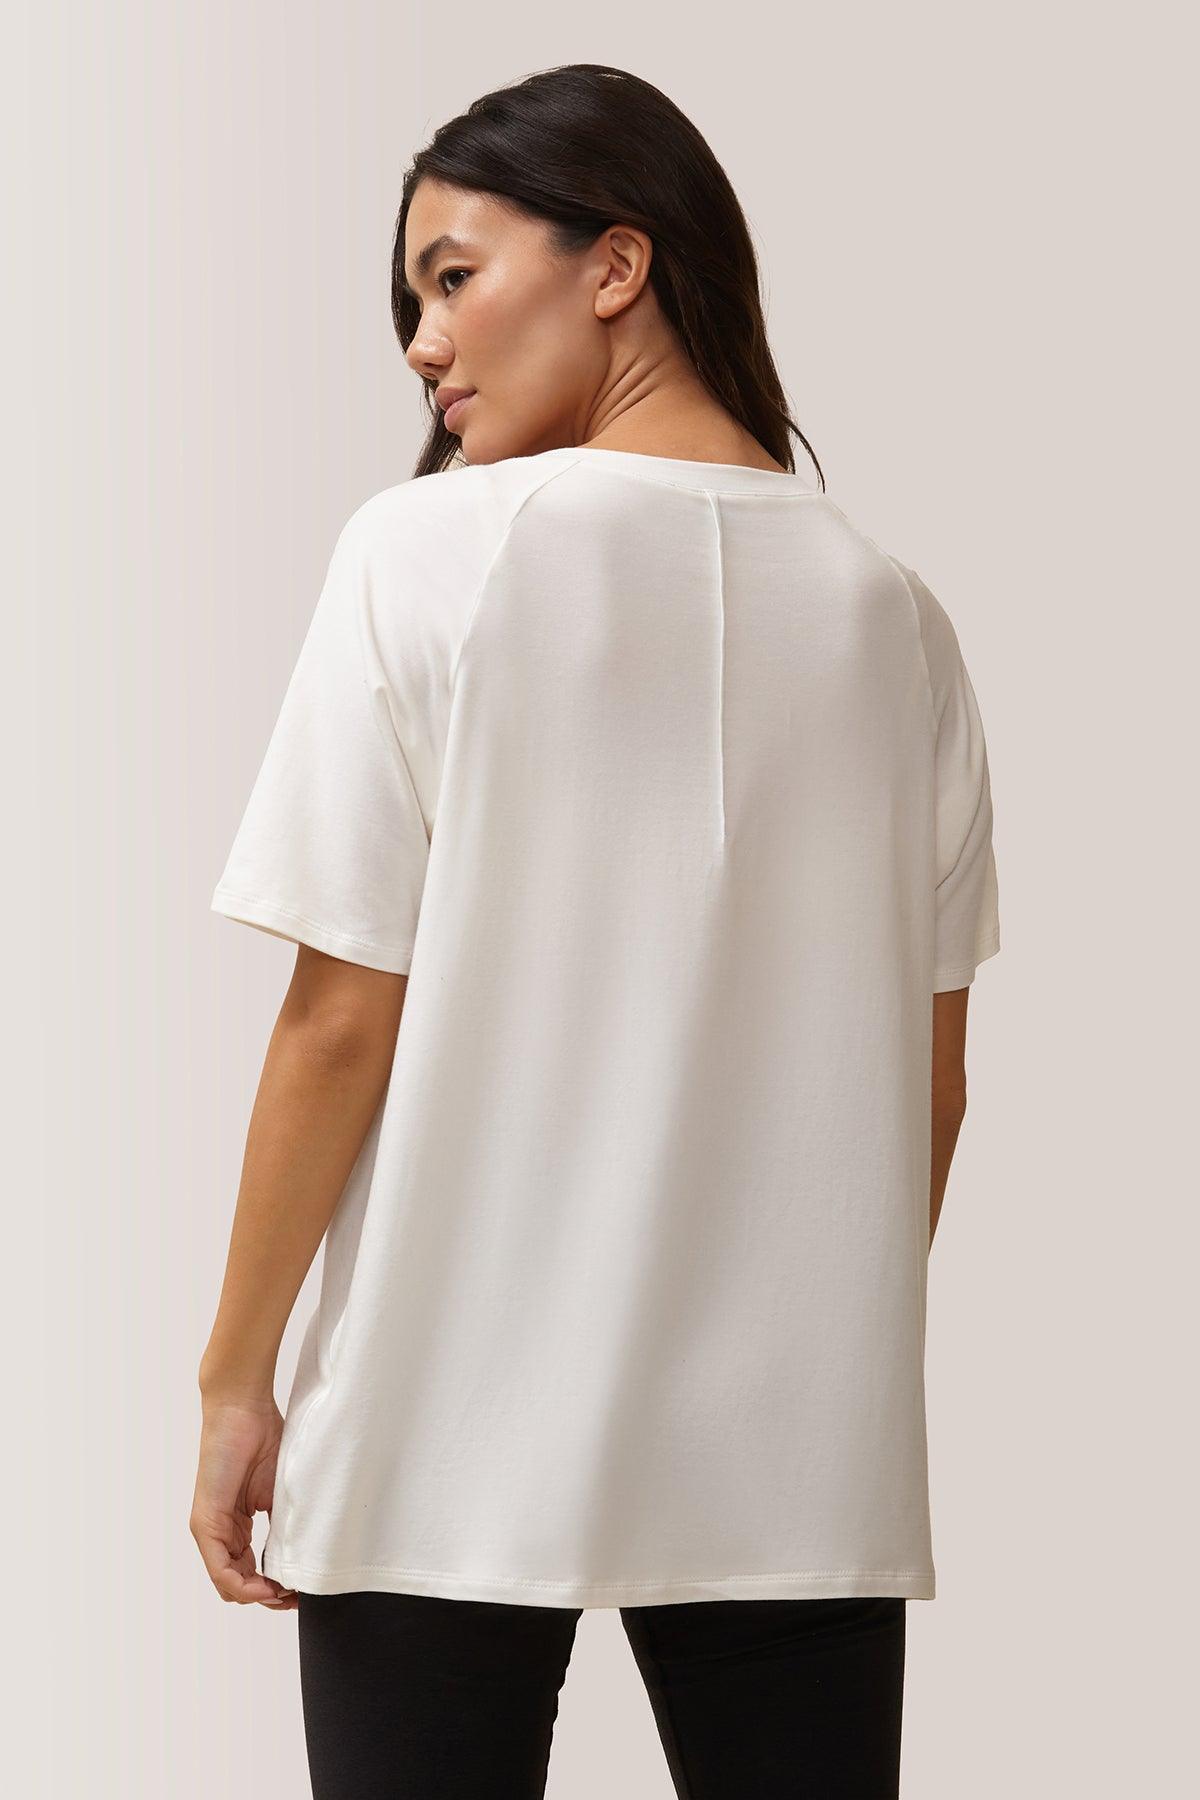 Femme vêtue du t-shirt blissful flow par Rose Boreal. / Women wearing the blissful flow t-shirt by Rose Boreal. - Natural White / Blanc Naturel